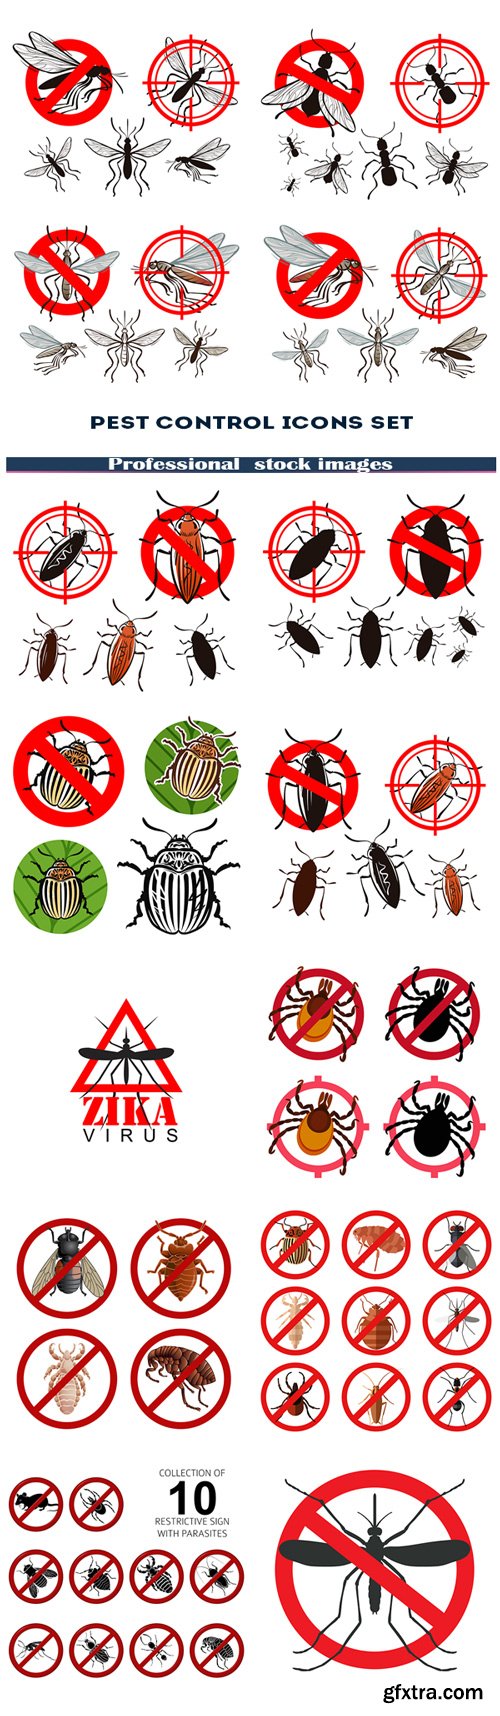 Pest control icons set